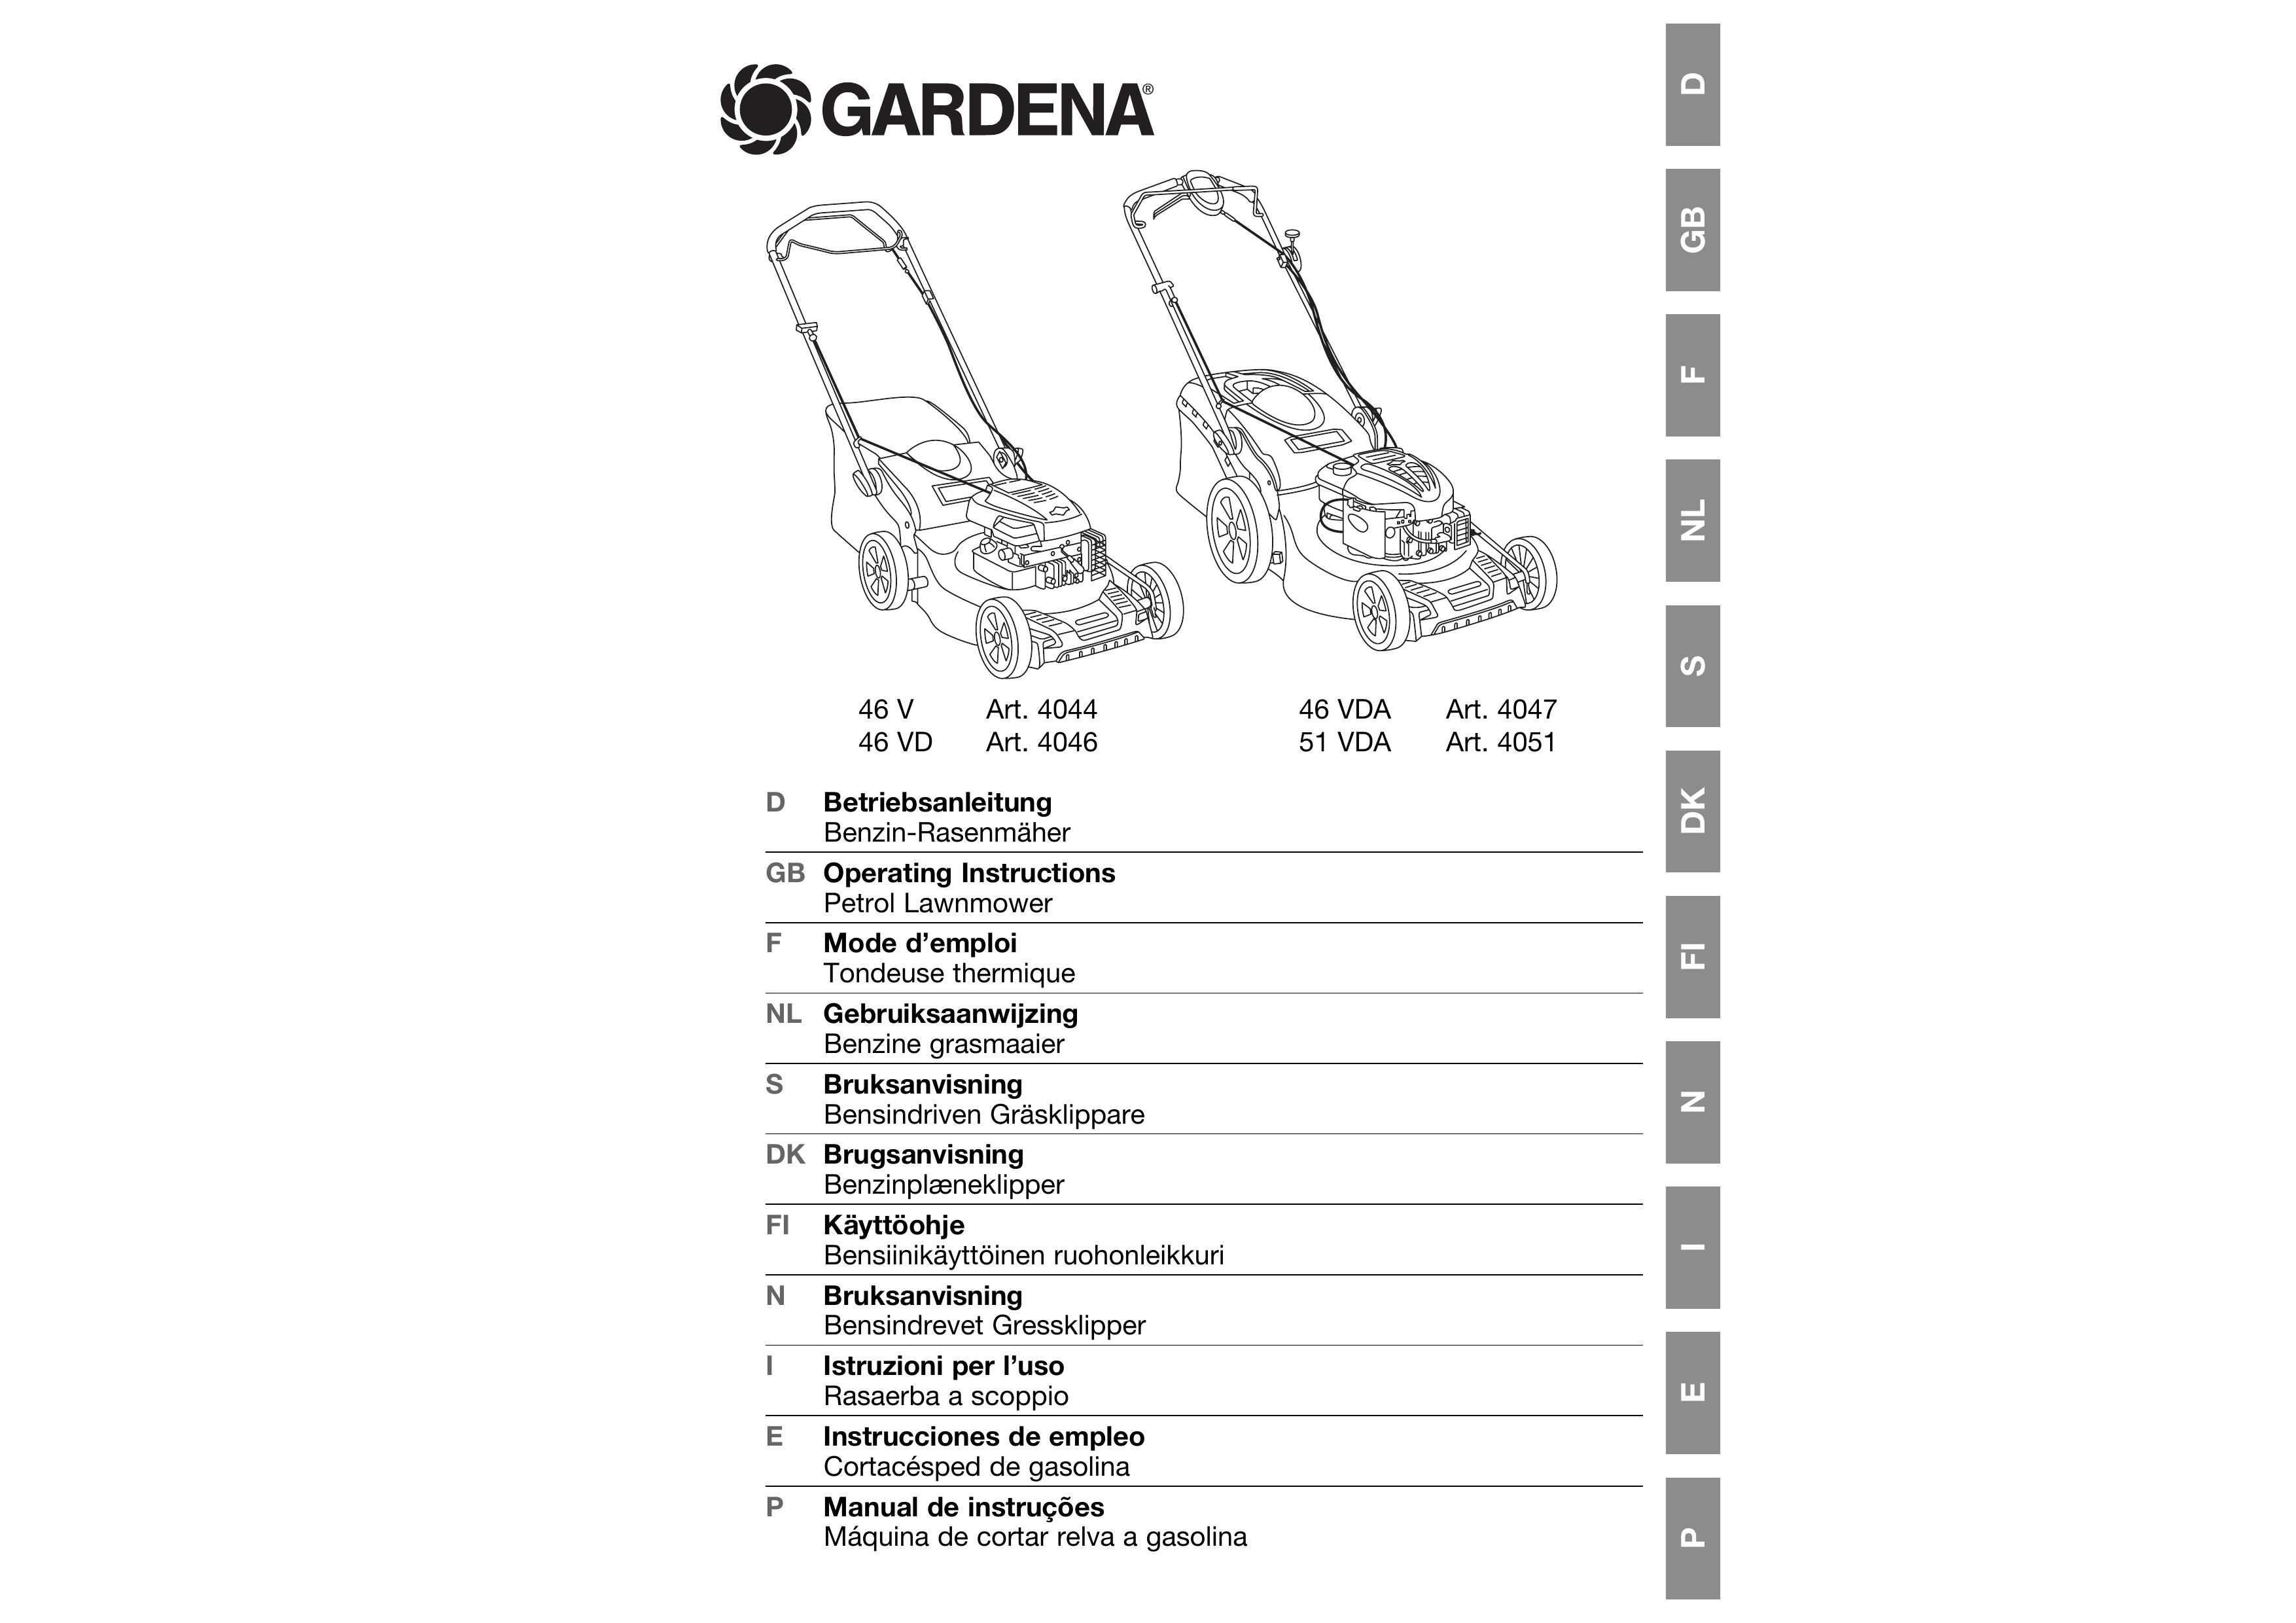 Gardena 4051 Lawn Mower User Manual